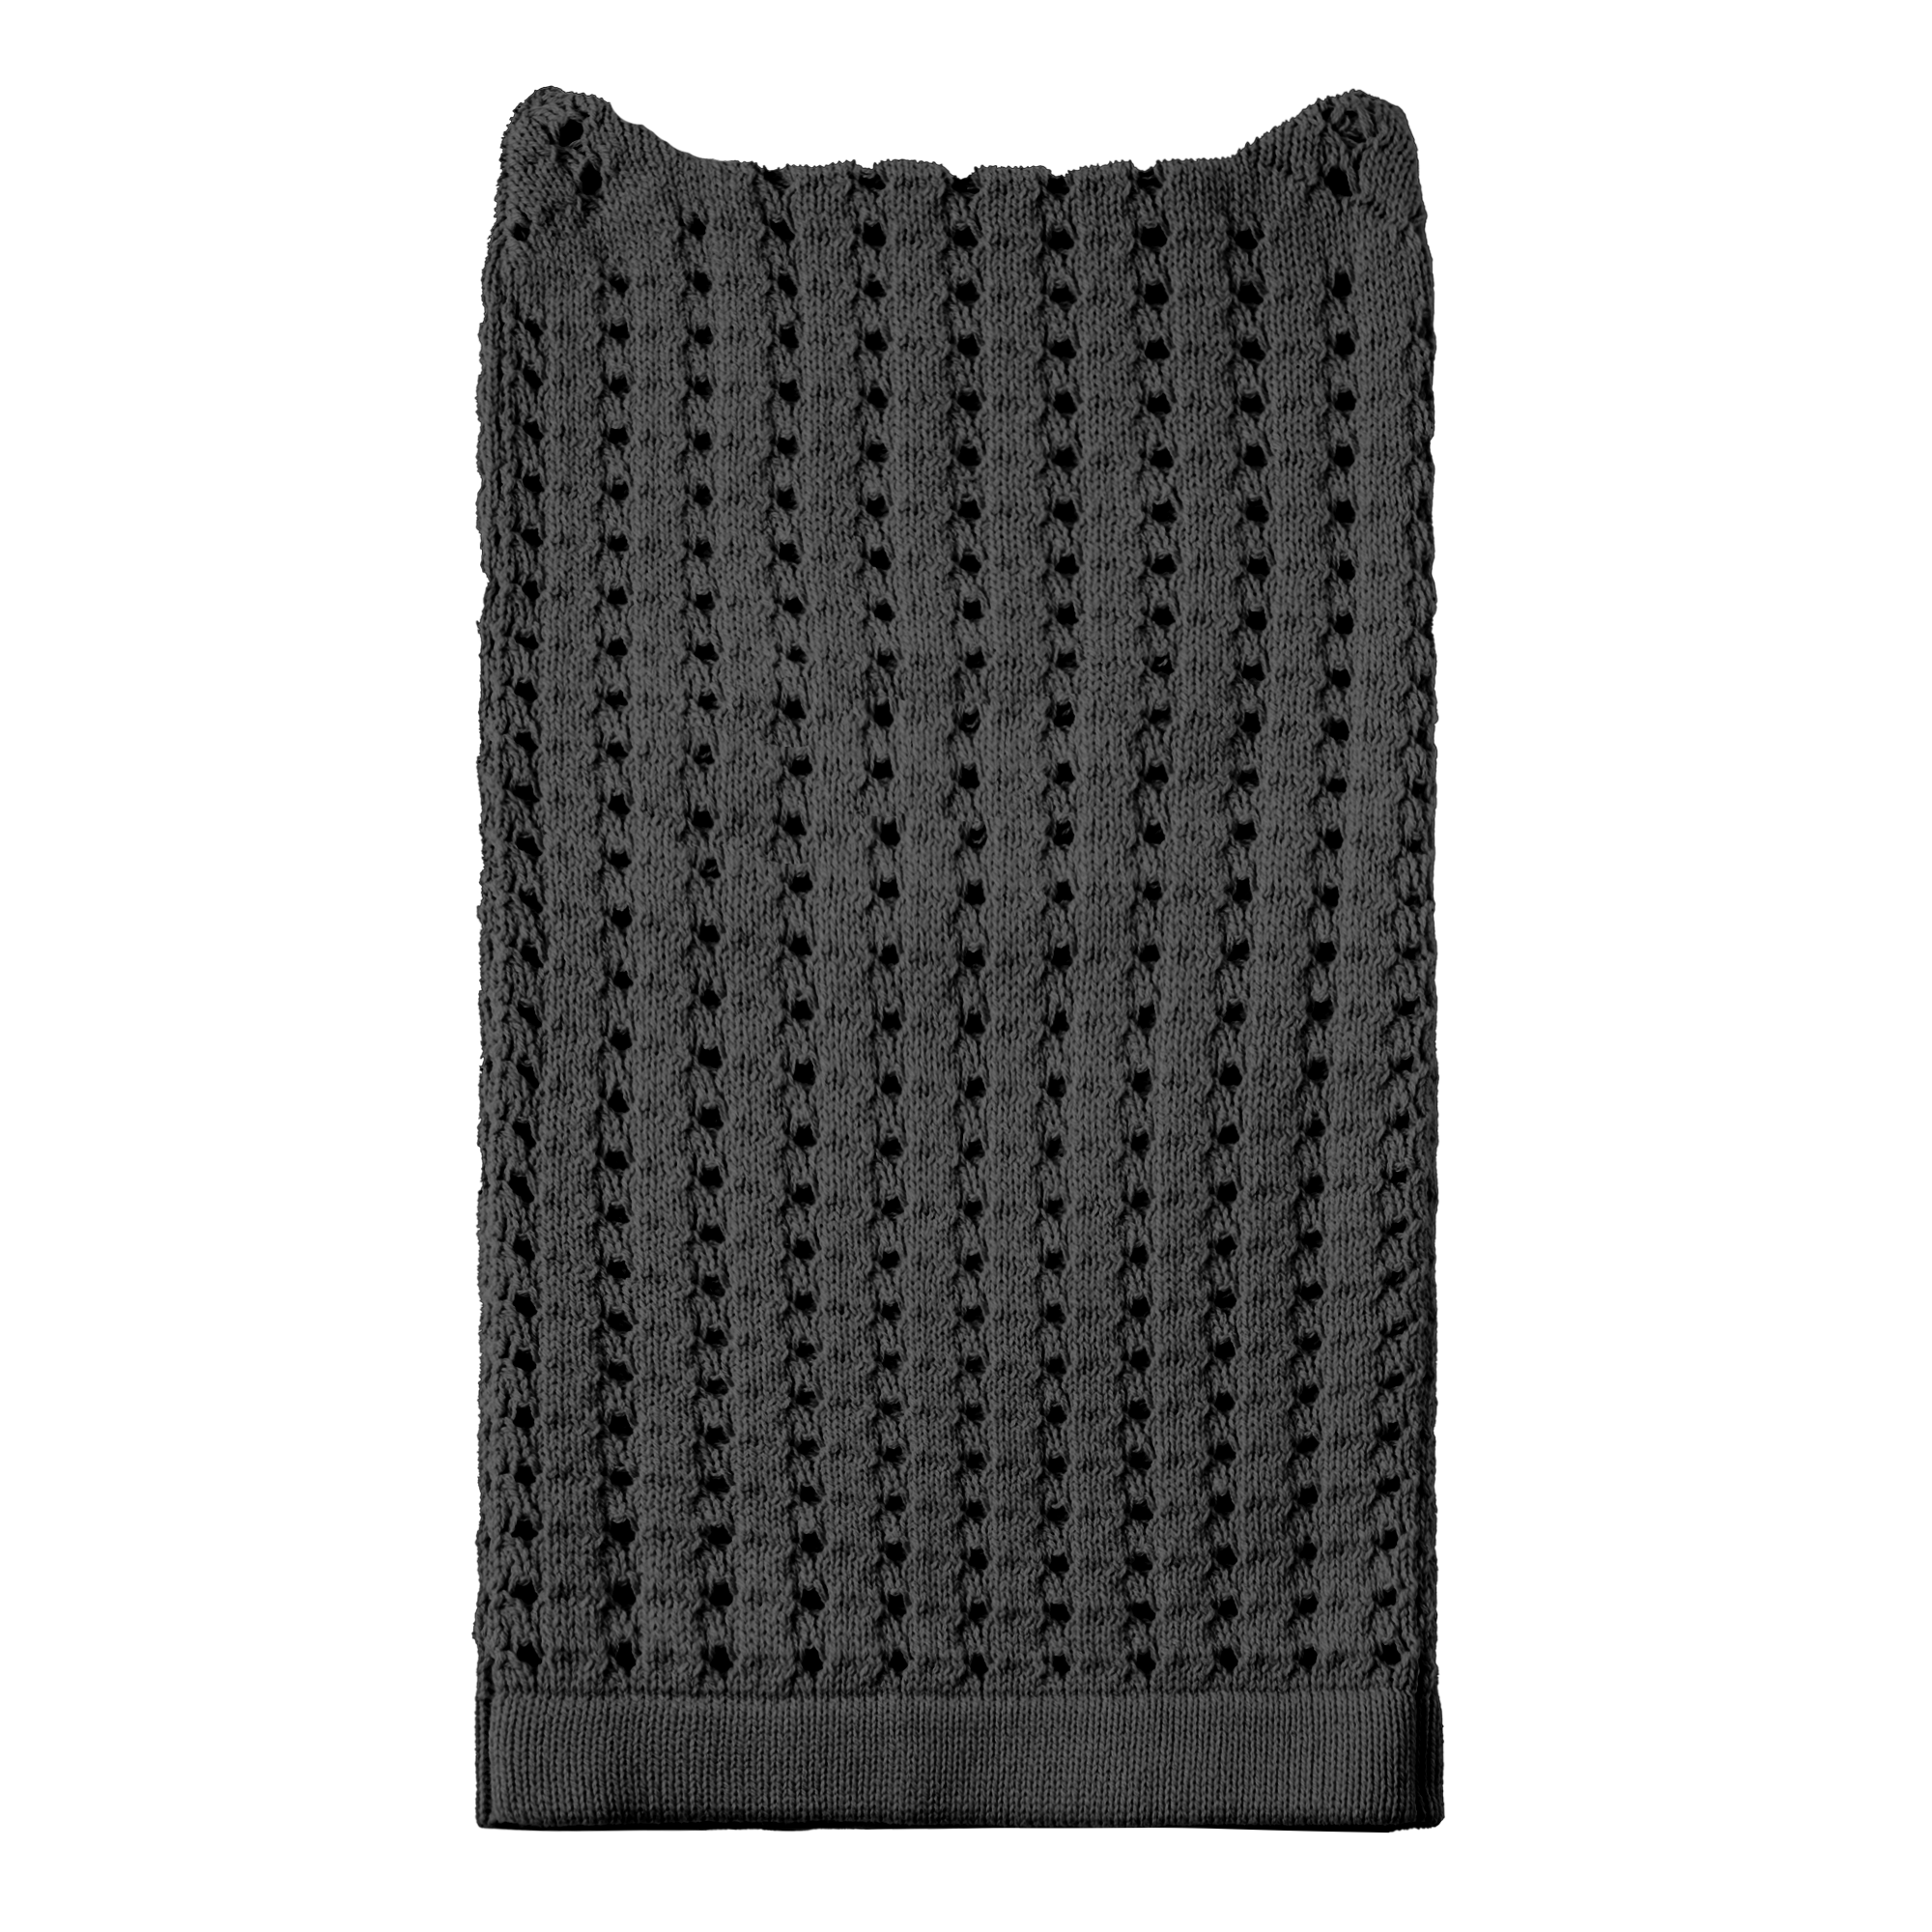 TAKA Original Eternet 002 black knit balaclava face mask